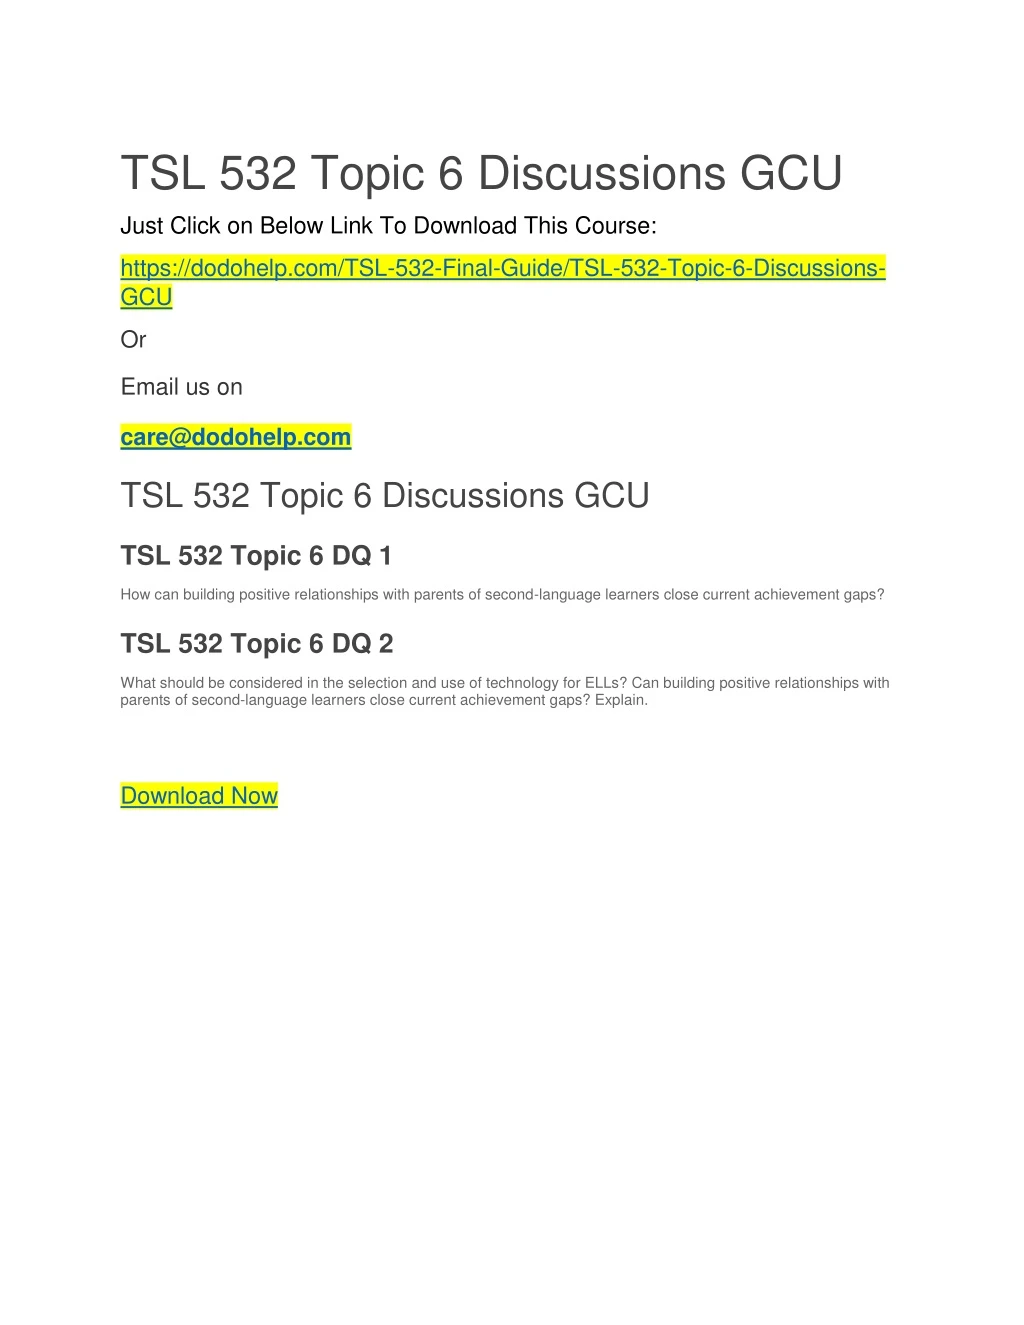 tsl 532 topic 6 discussions gcu just click